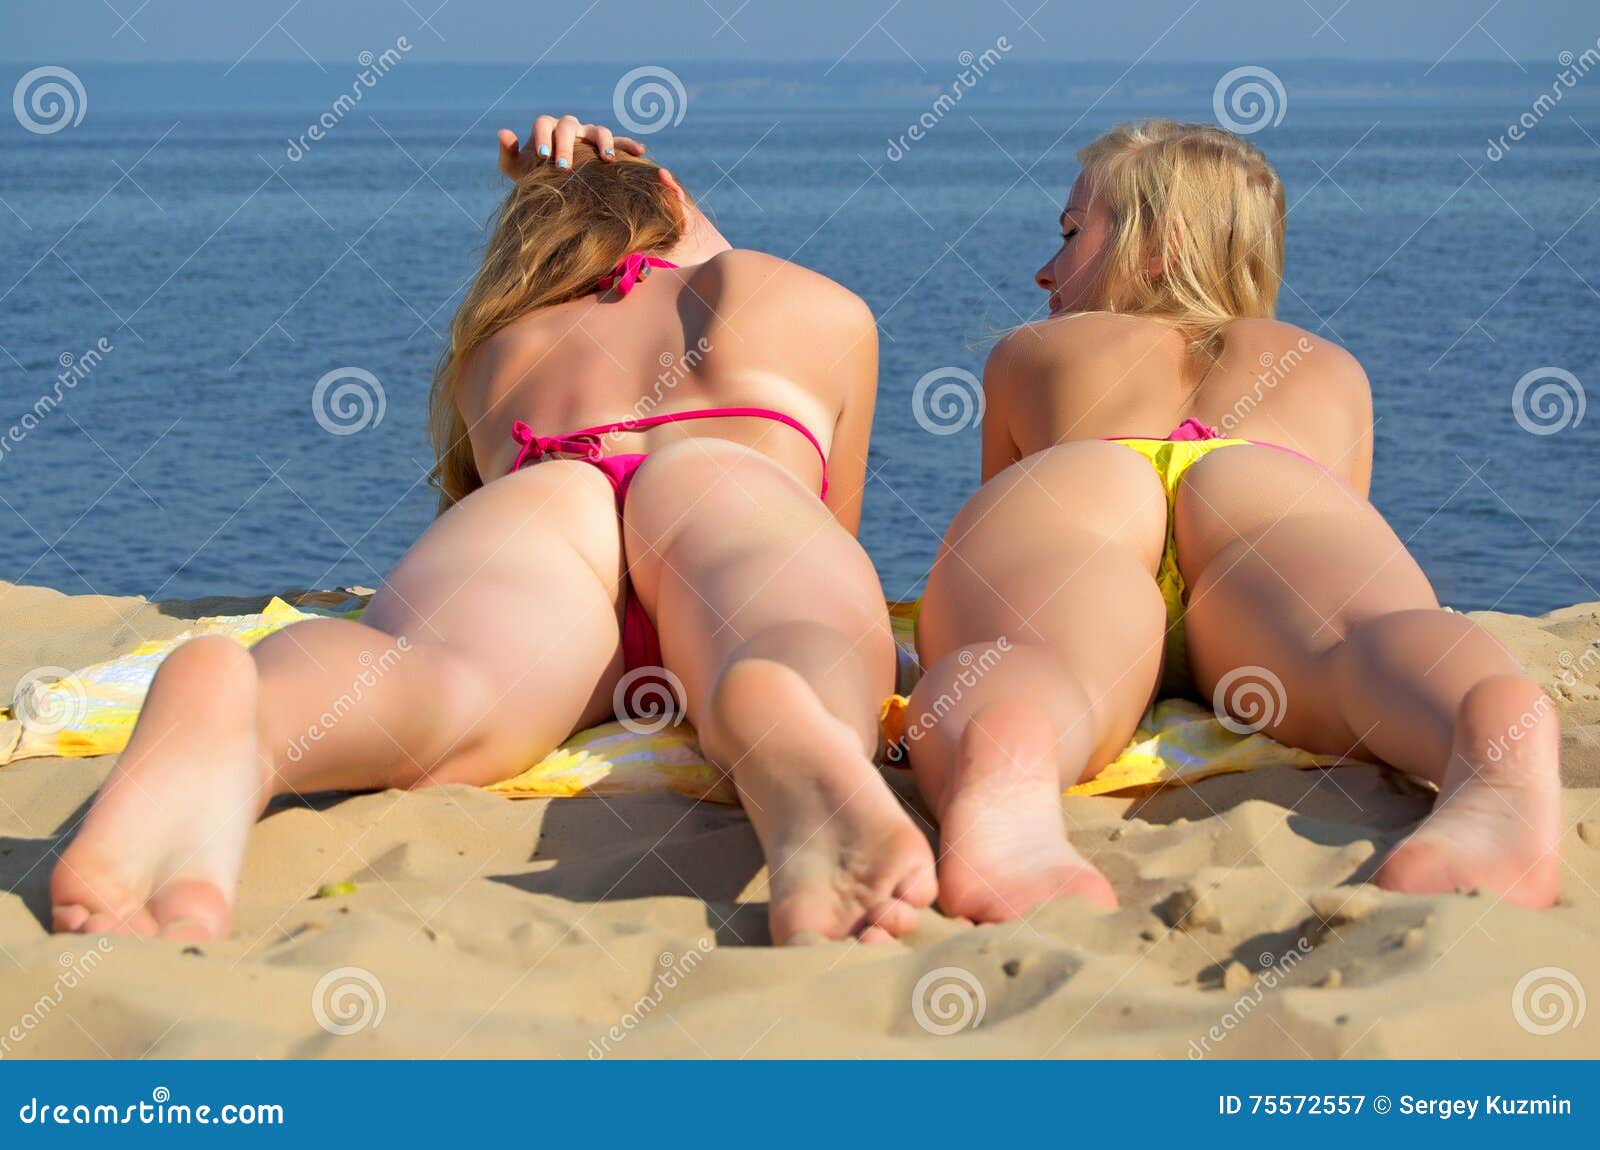 https://thumbs.dreamstime.com/z/girls-thongs-beach-two-sexy-sunbathing-75572557.jpg